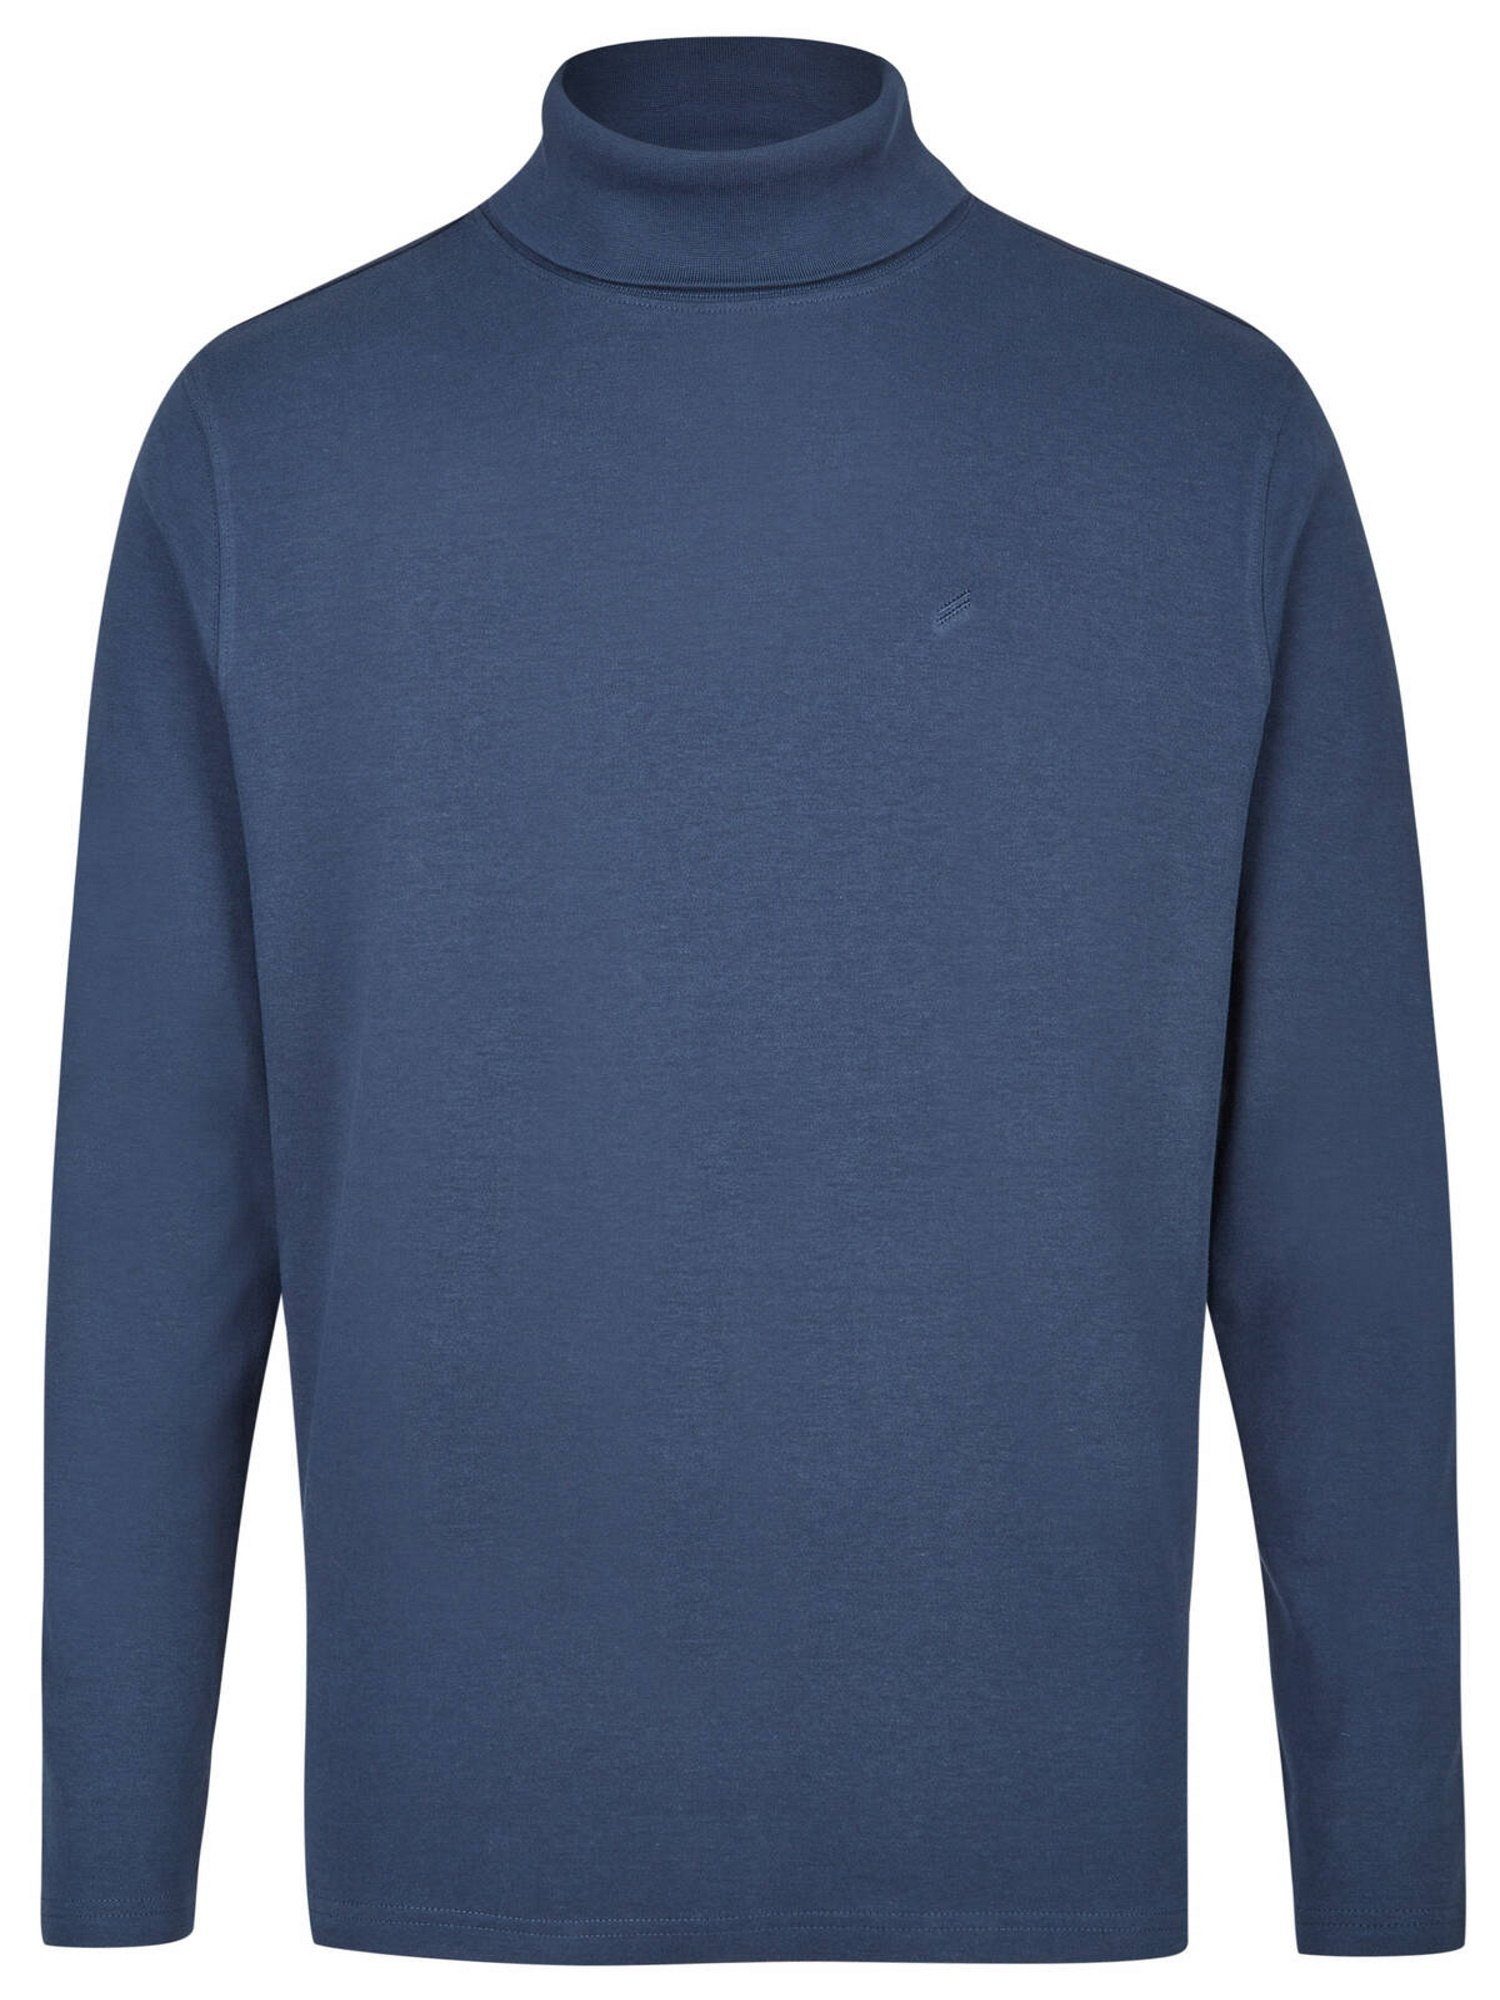 blue Hechter midnight Daniel Interlock-Jersey PARIS aus HECHTER aus Rollkragenpullover Rollkragen-Shirt Shirt